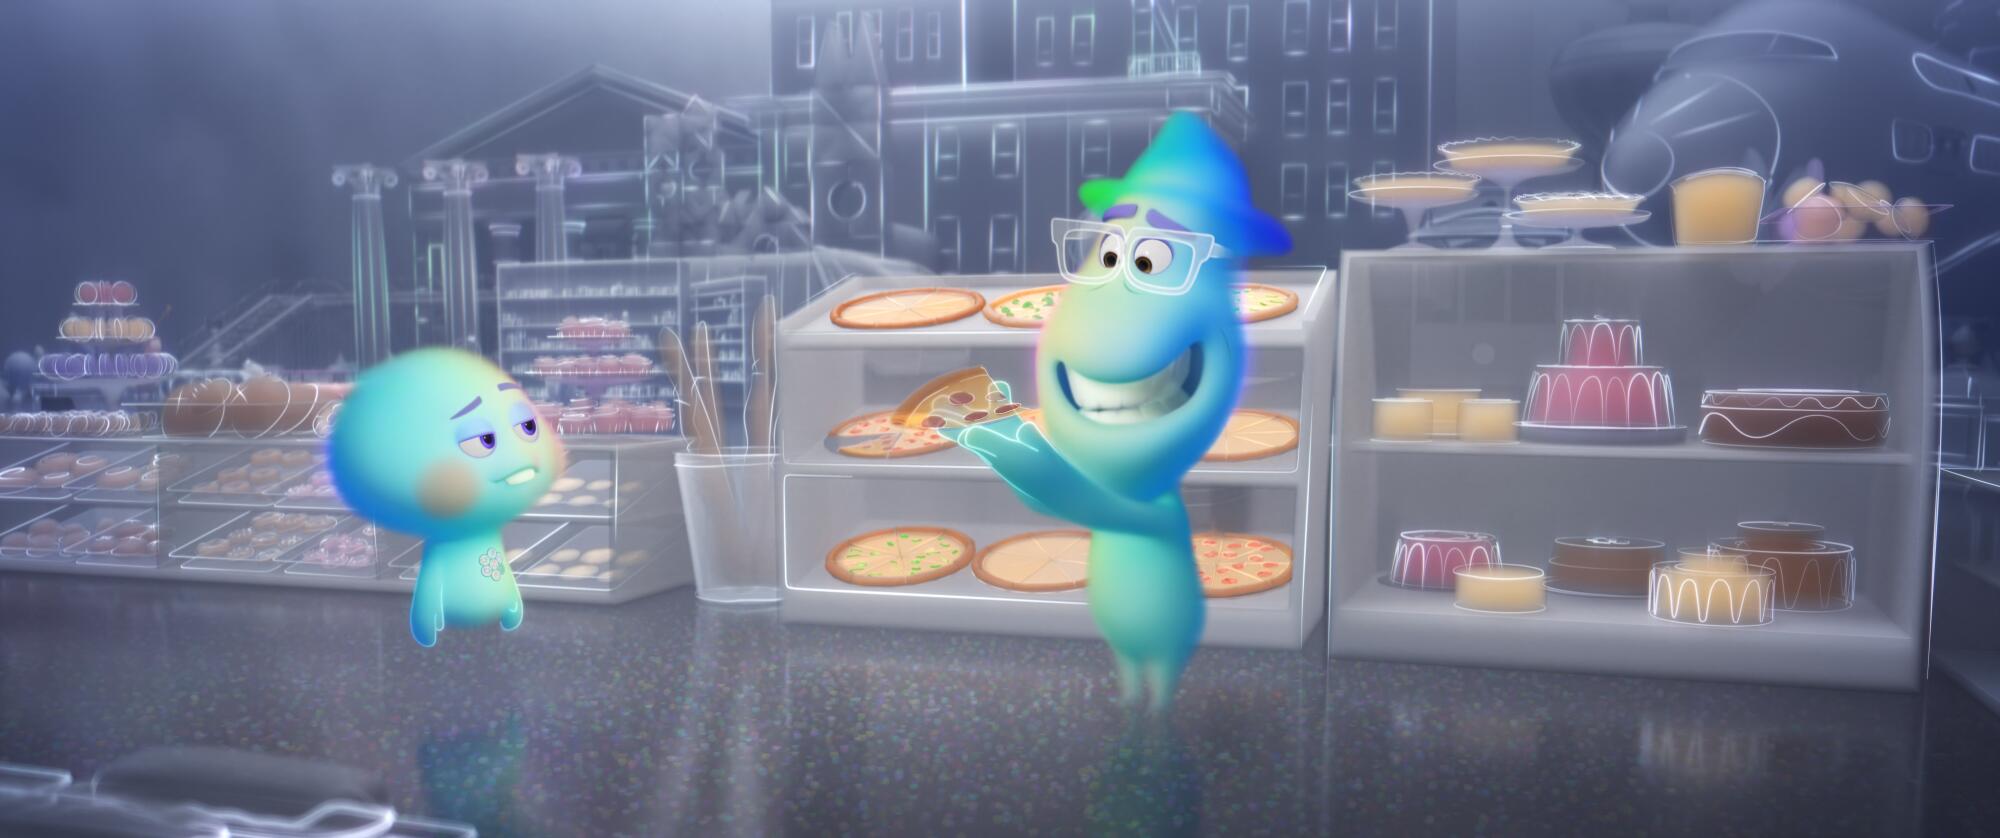 Pixar's "Soul" will launch Dec. 25 on Disney+.